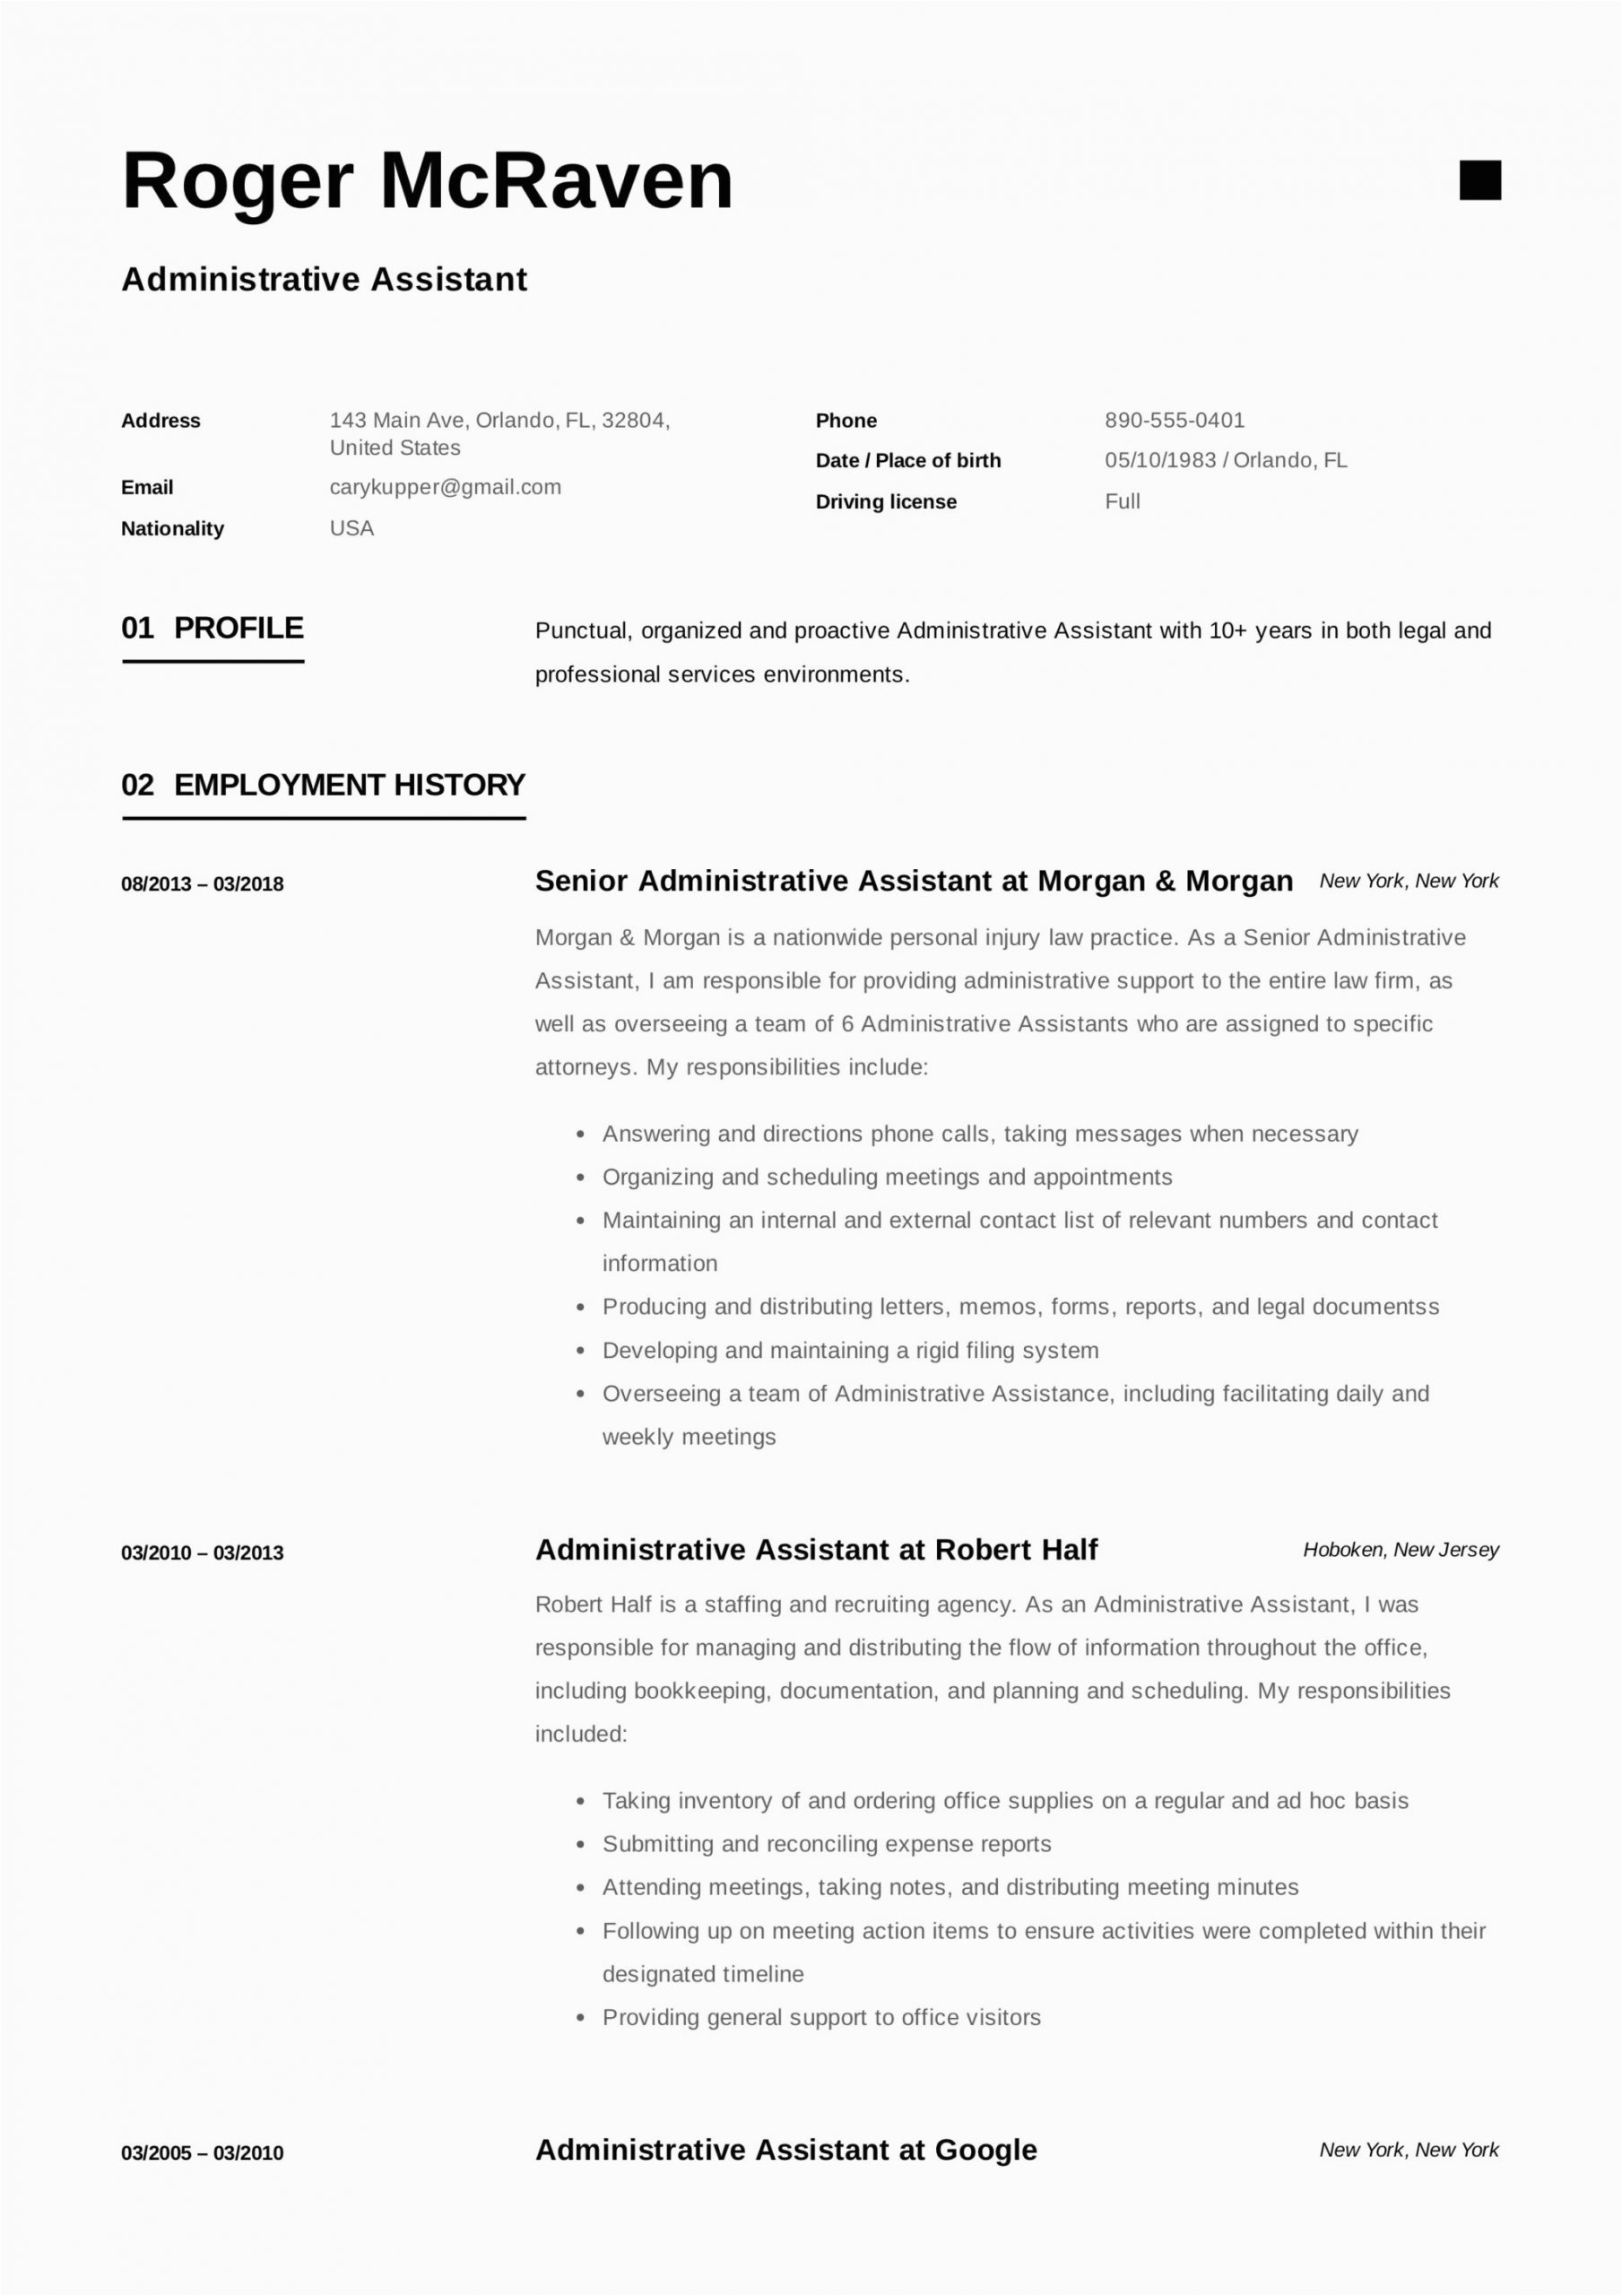 Sample Resume Profile for Administrative assistant 19 Free Administrative assistant Resumes & Writing Guide